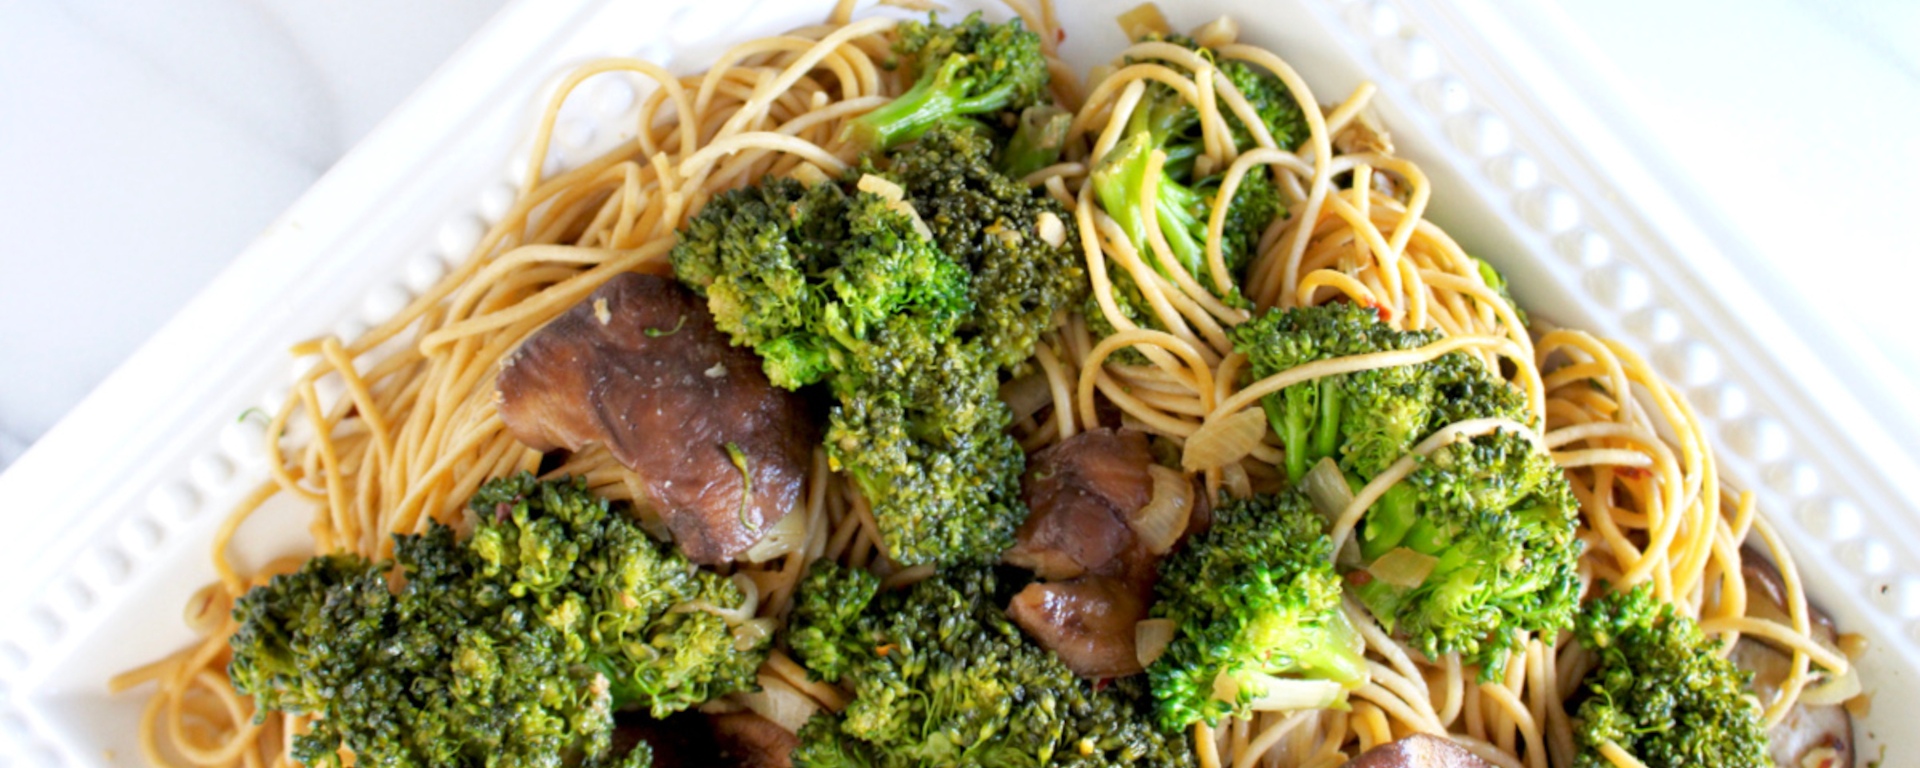 LuvMyRecipe.com - Shitake Broccoli Noodles Featured